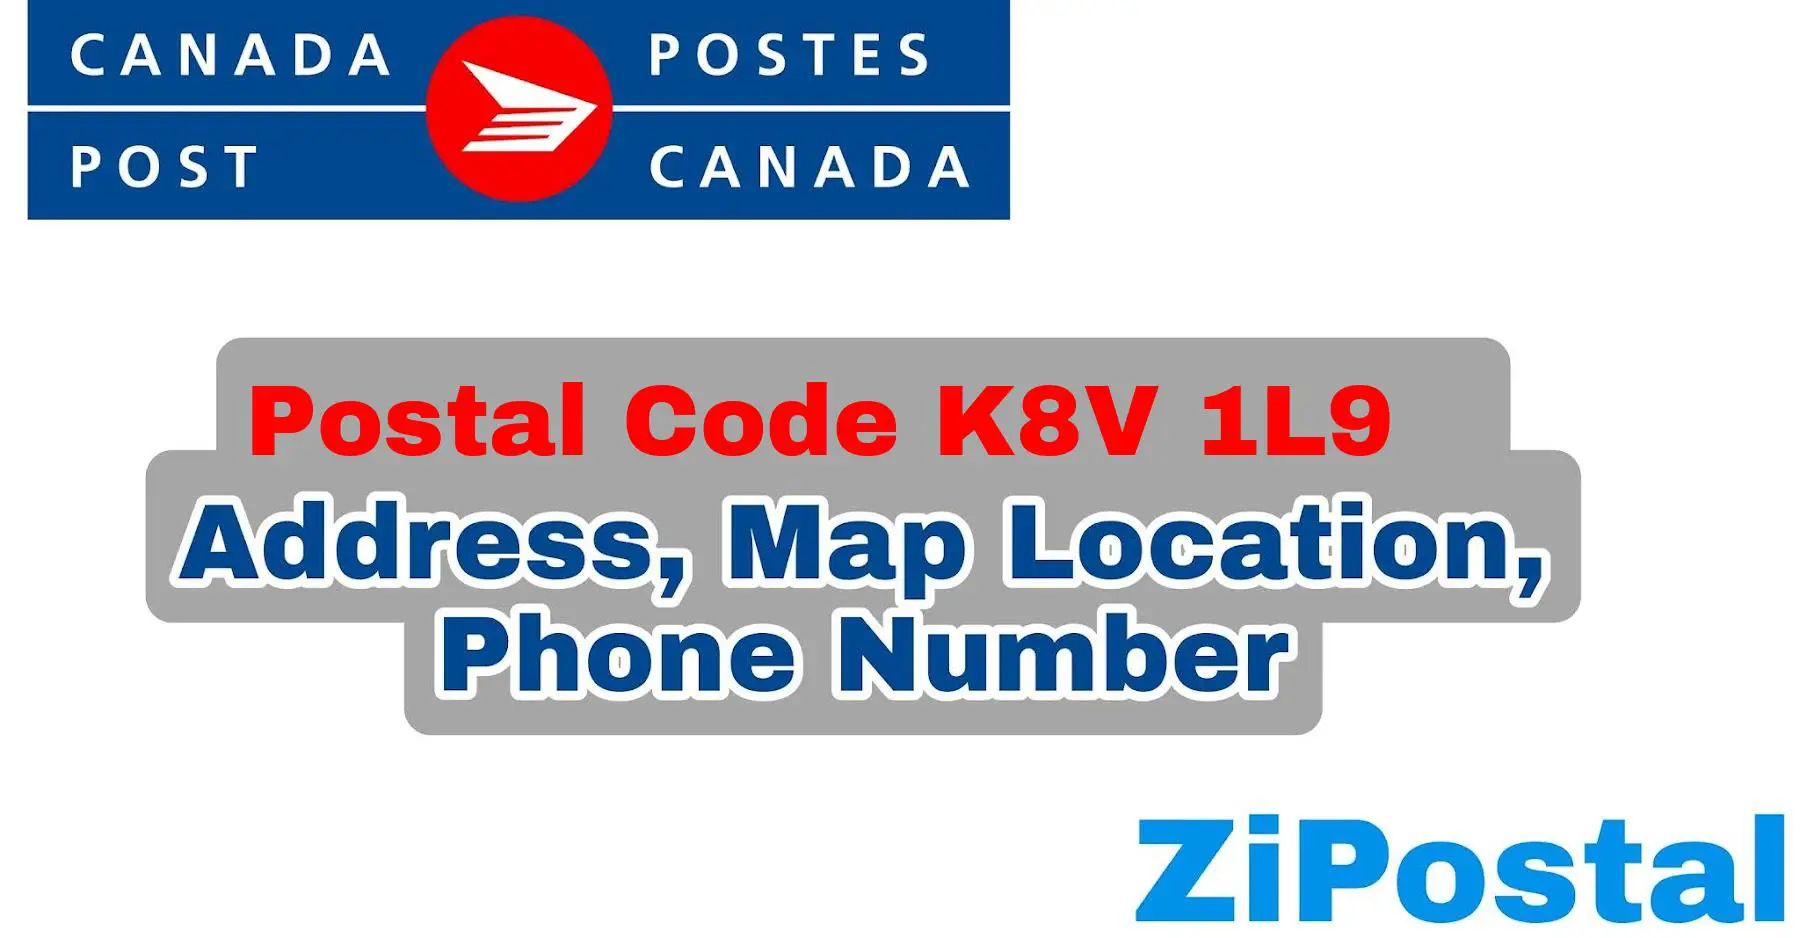 Postal Code K8V 1L9 Address Map Location and Phone Number